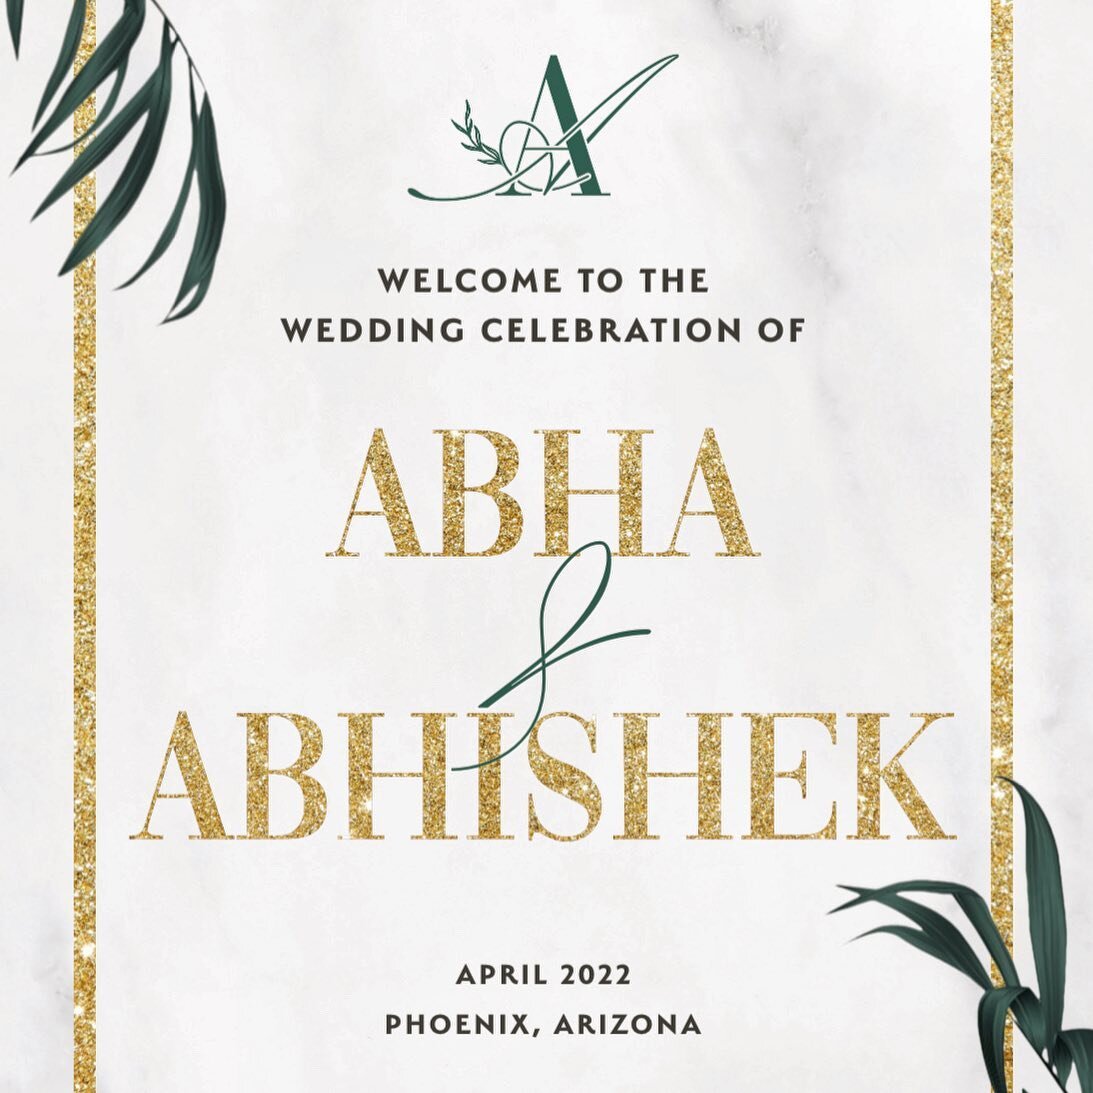 Happy wedding weekend Abha &amp; Abhishek!!!
@eventsbyvaishali @partywithluxe #abhashek 

.
.
.
.
. 
#weddingstationery #arizona #desertwedding 
#invitations #weddinginvitations #design #graphicdesign #stationery #weddingstationery #customdesign #bri